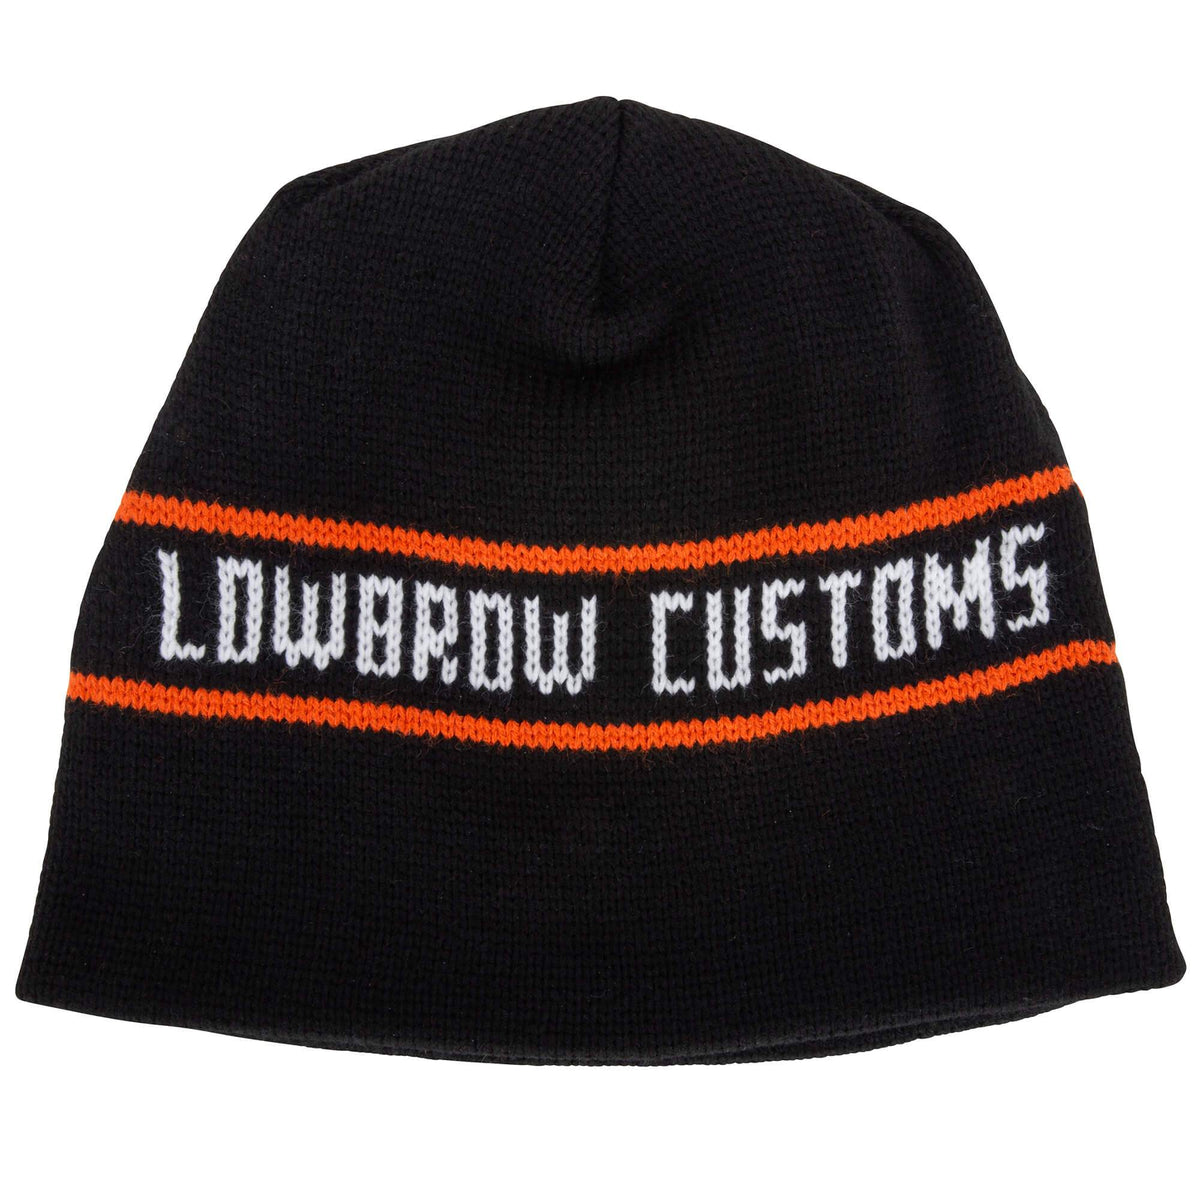 Lowbrow Customs Motor Company Knit Beanie Hat